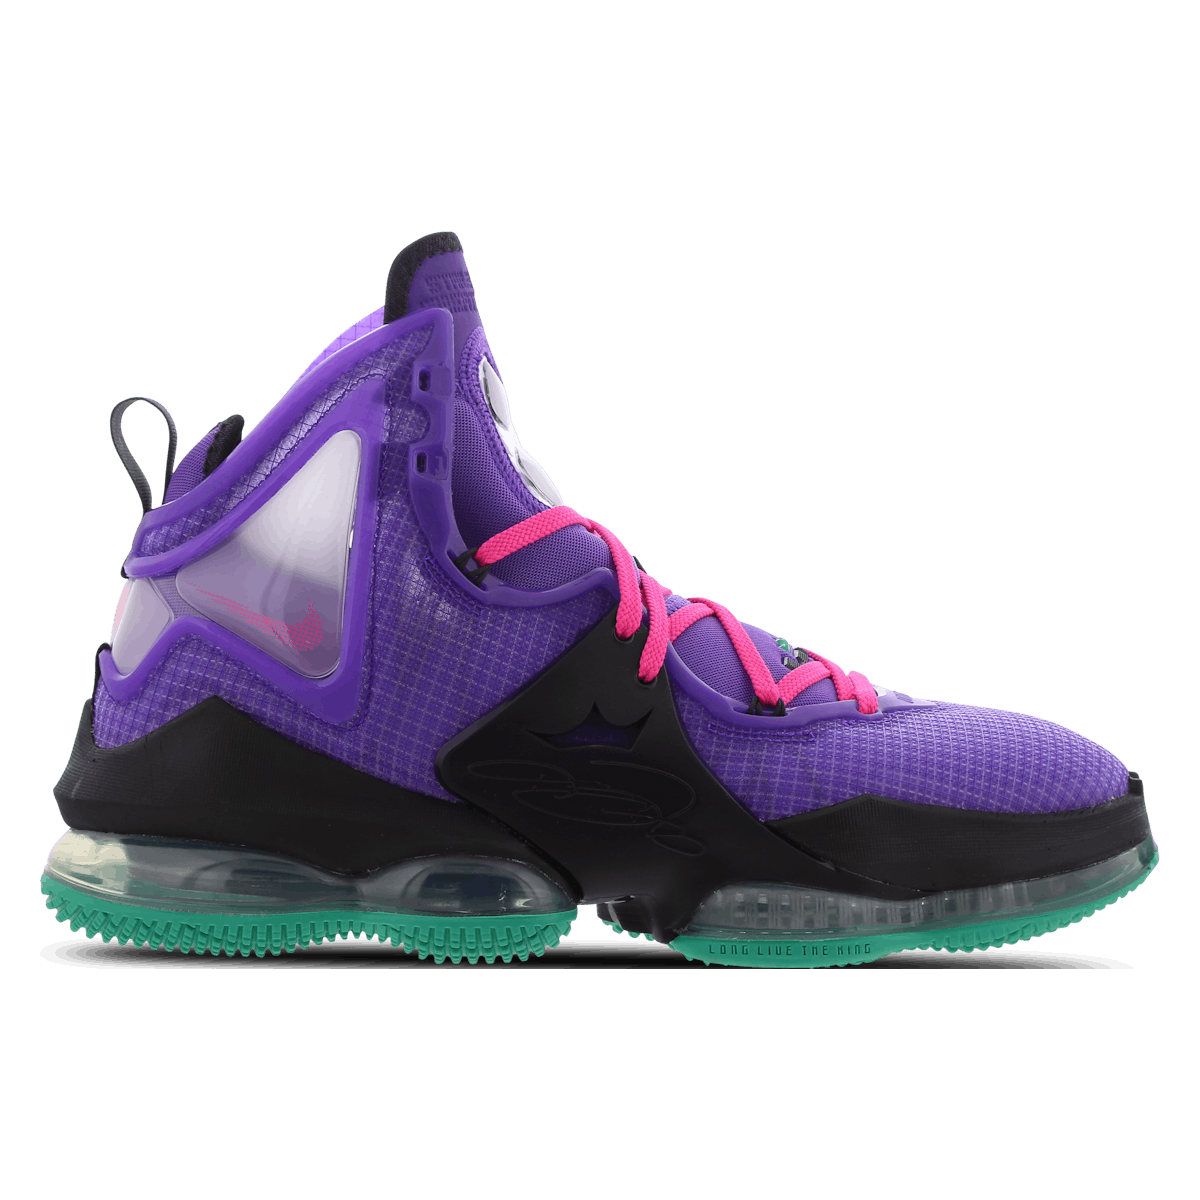 Nike LeBron 19 Purple Teal